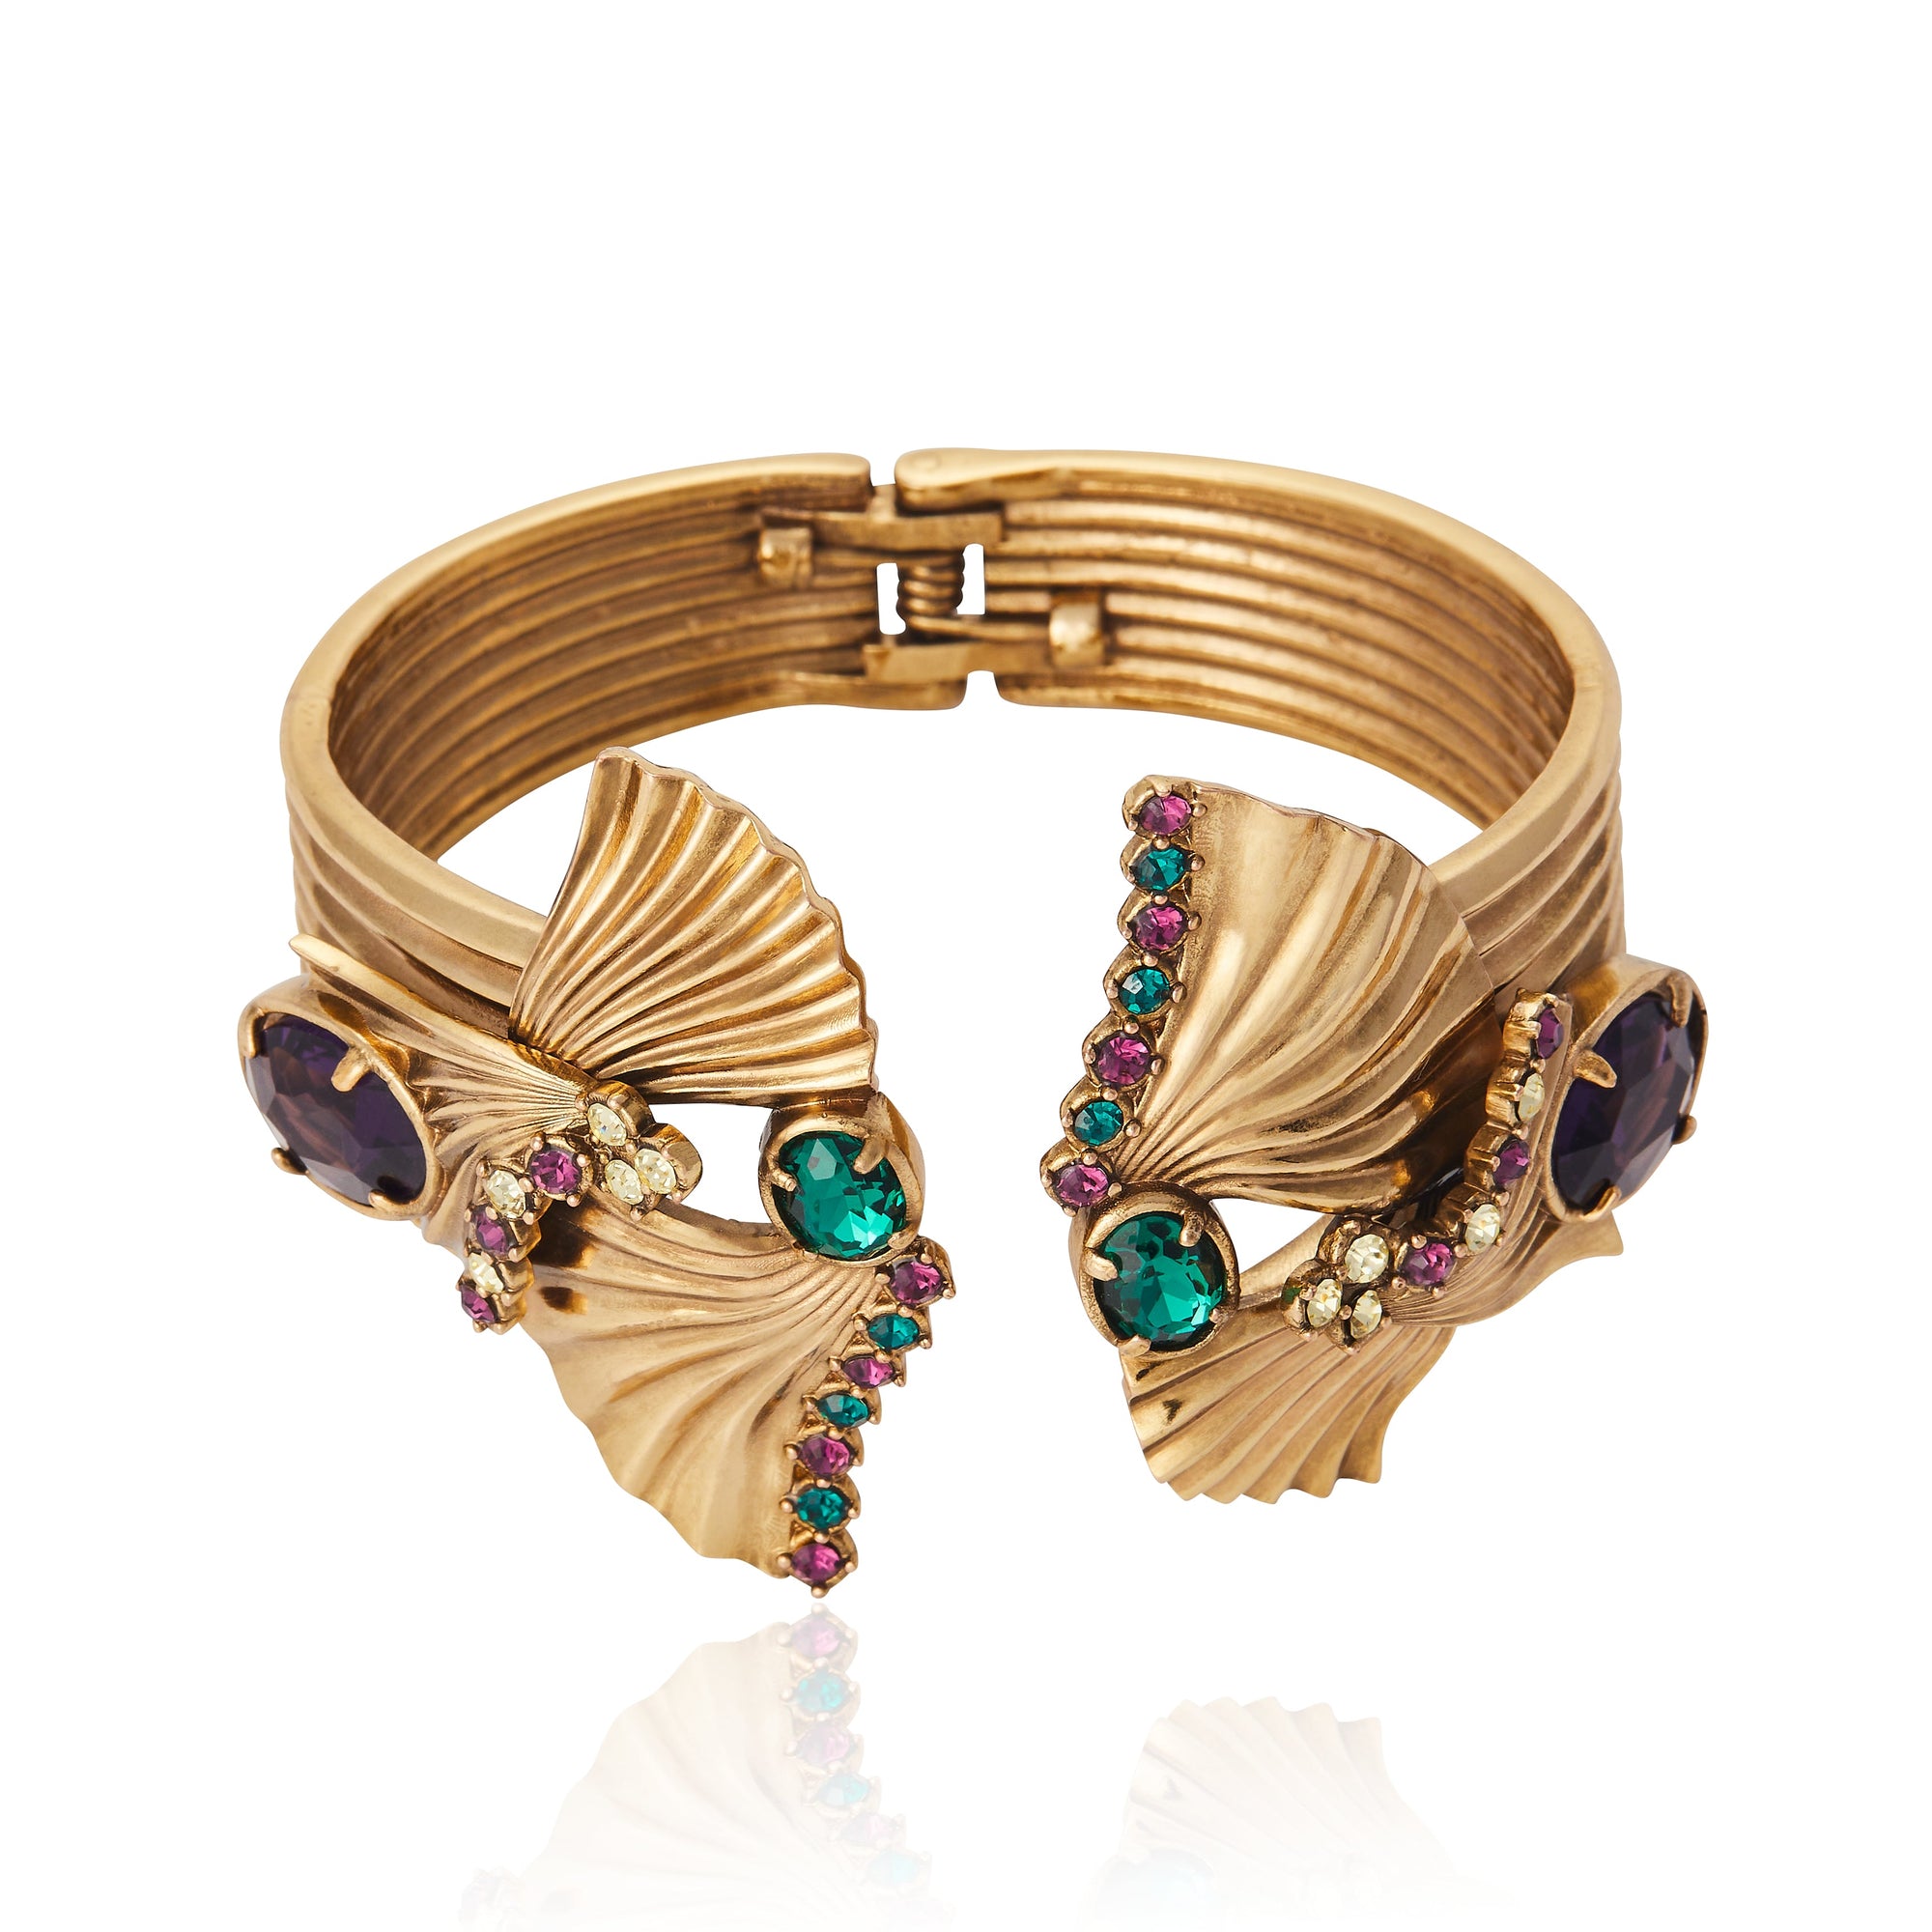 Milano Bracelet - Emerald